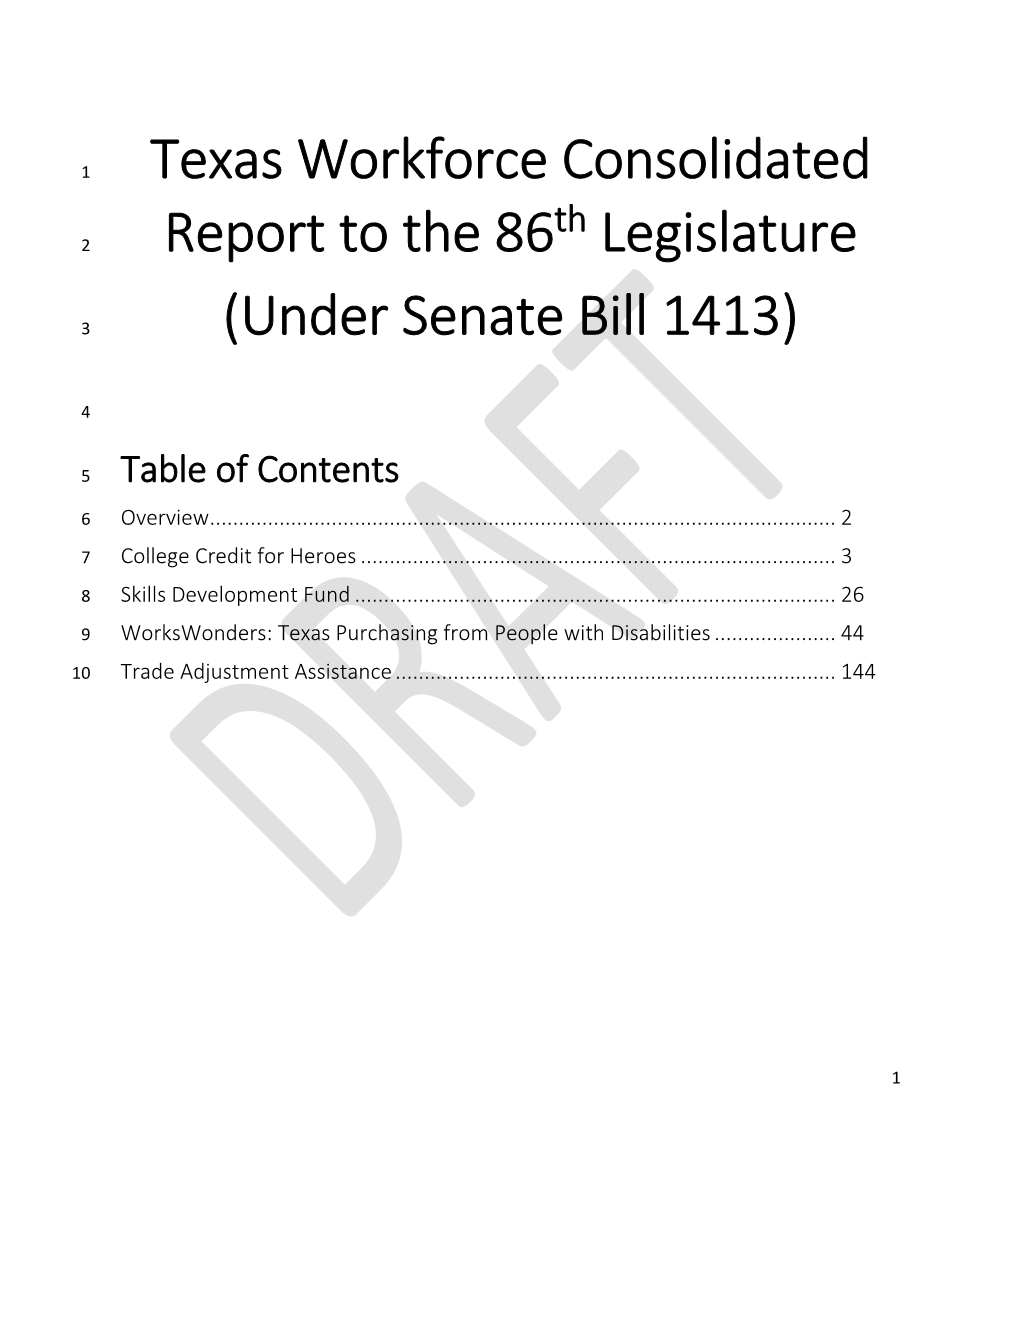 Texas Workforce Consolidated Report to the 86Th Legislature (Under Senate Bill 1413)